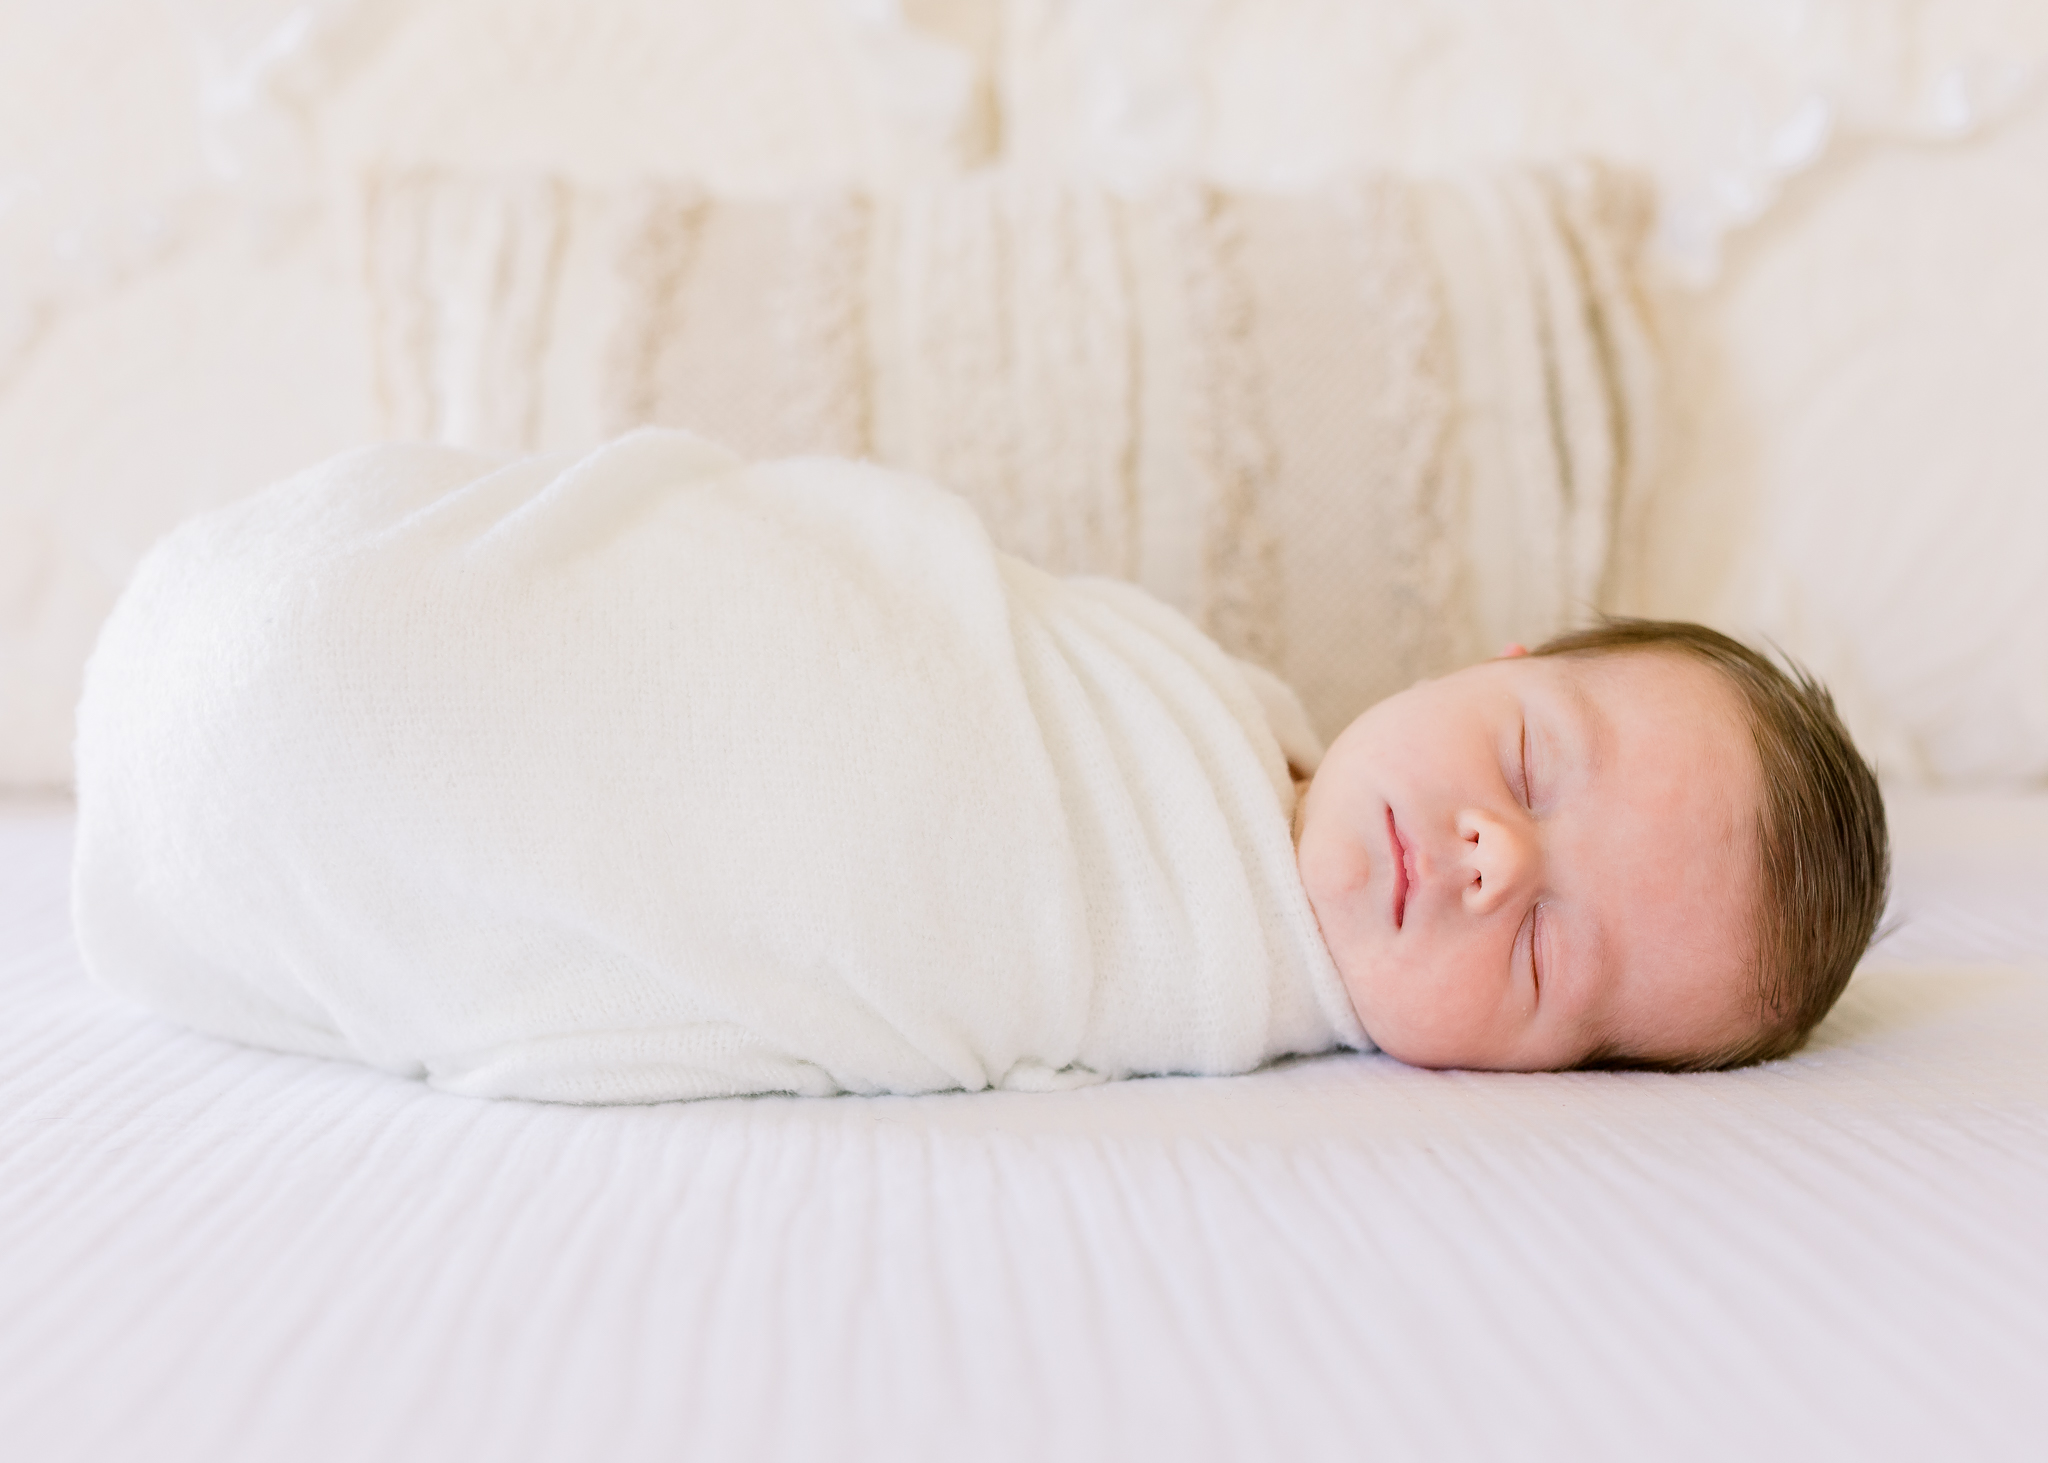 Madison newborn photographer captures image of baby boy swaddled in white fabric on white linen bedding.